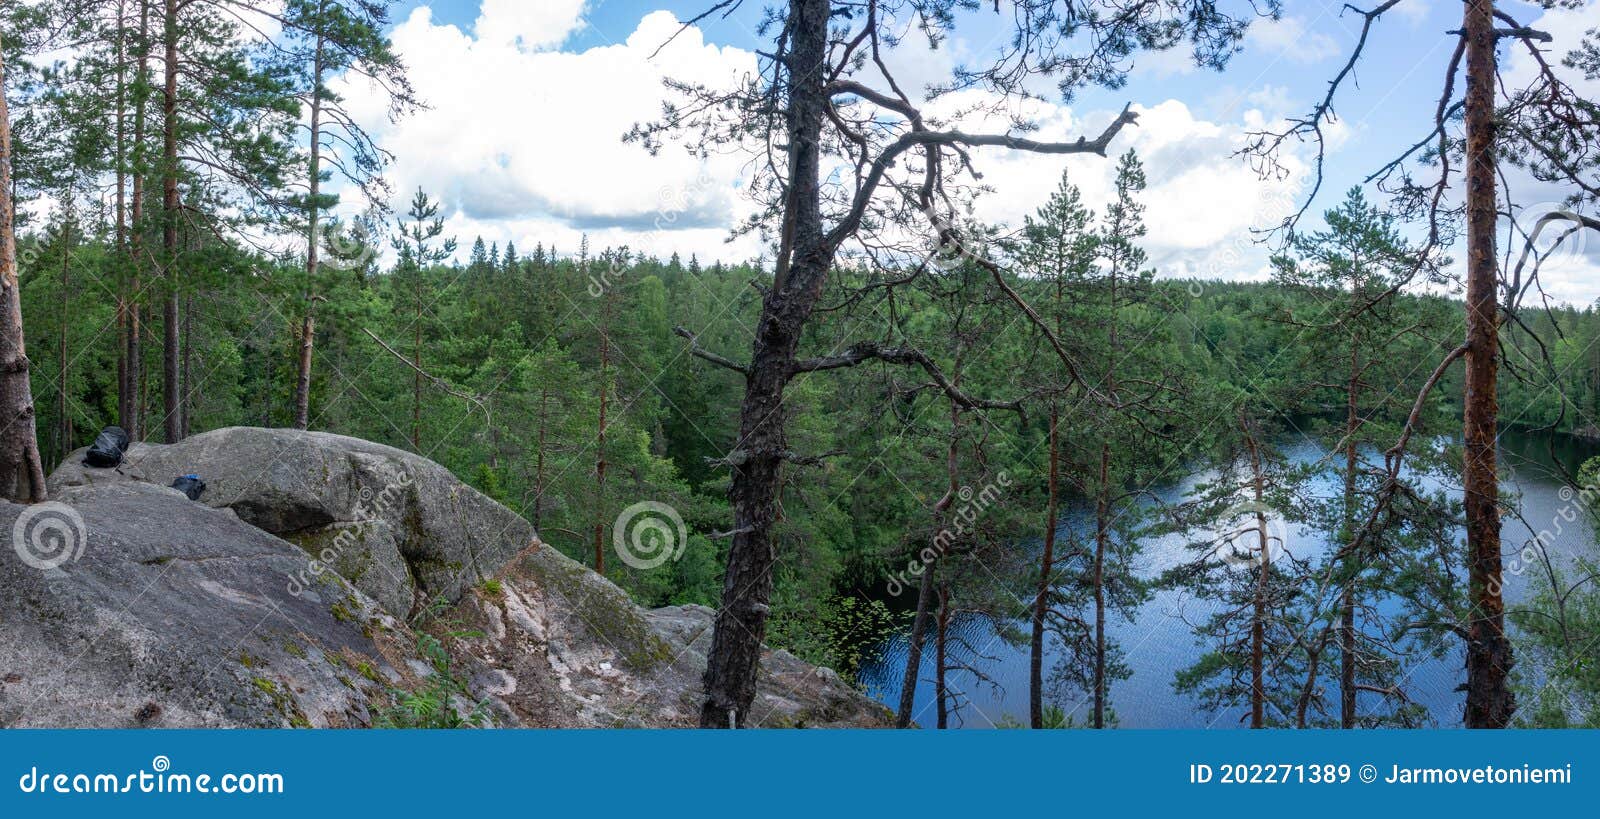 Scene at hiking trail in Nuuksio national park, Espoo, Finland